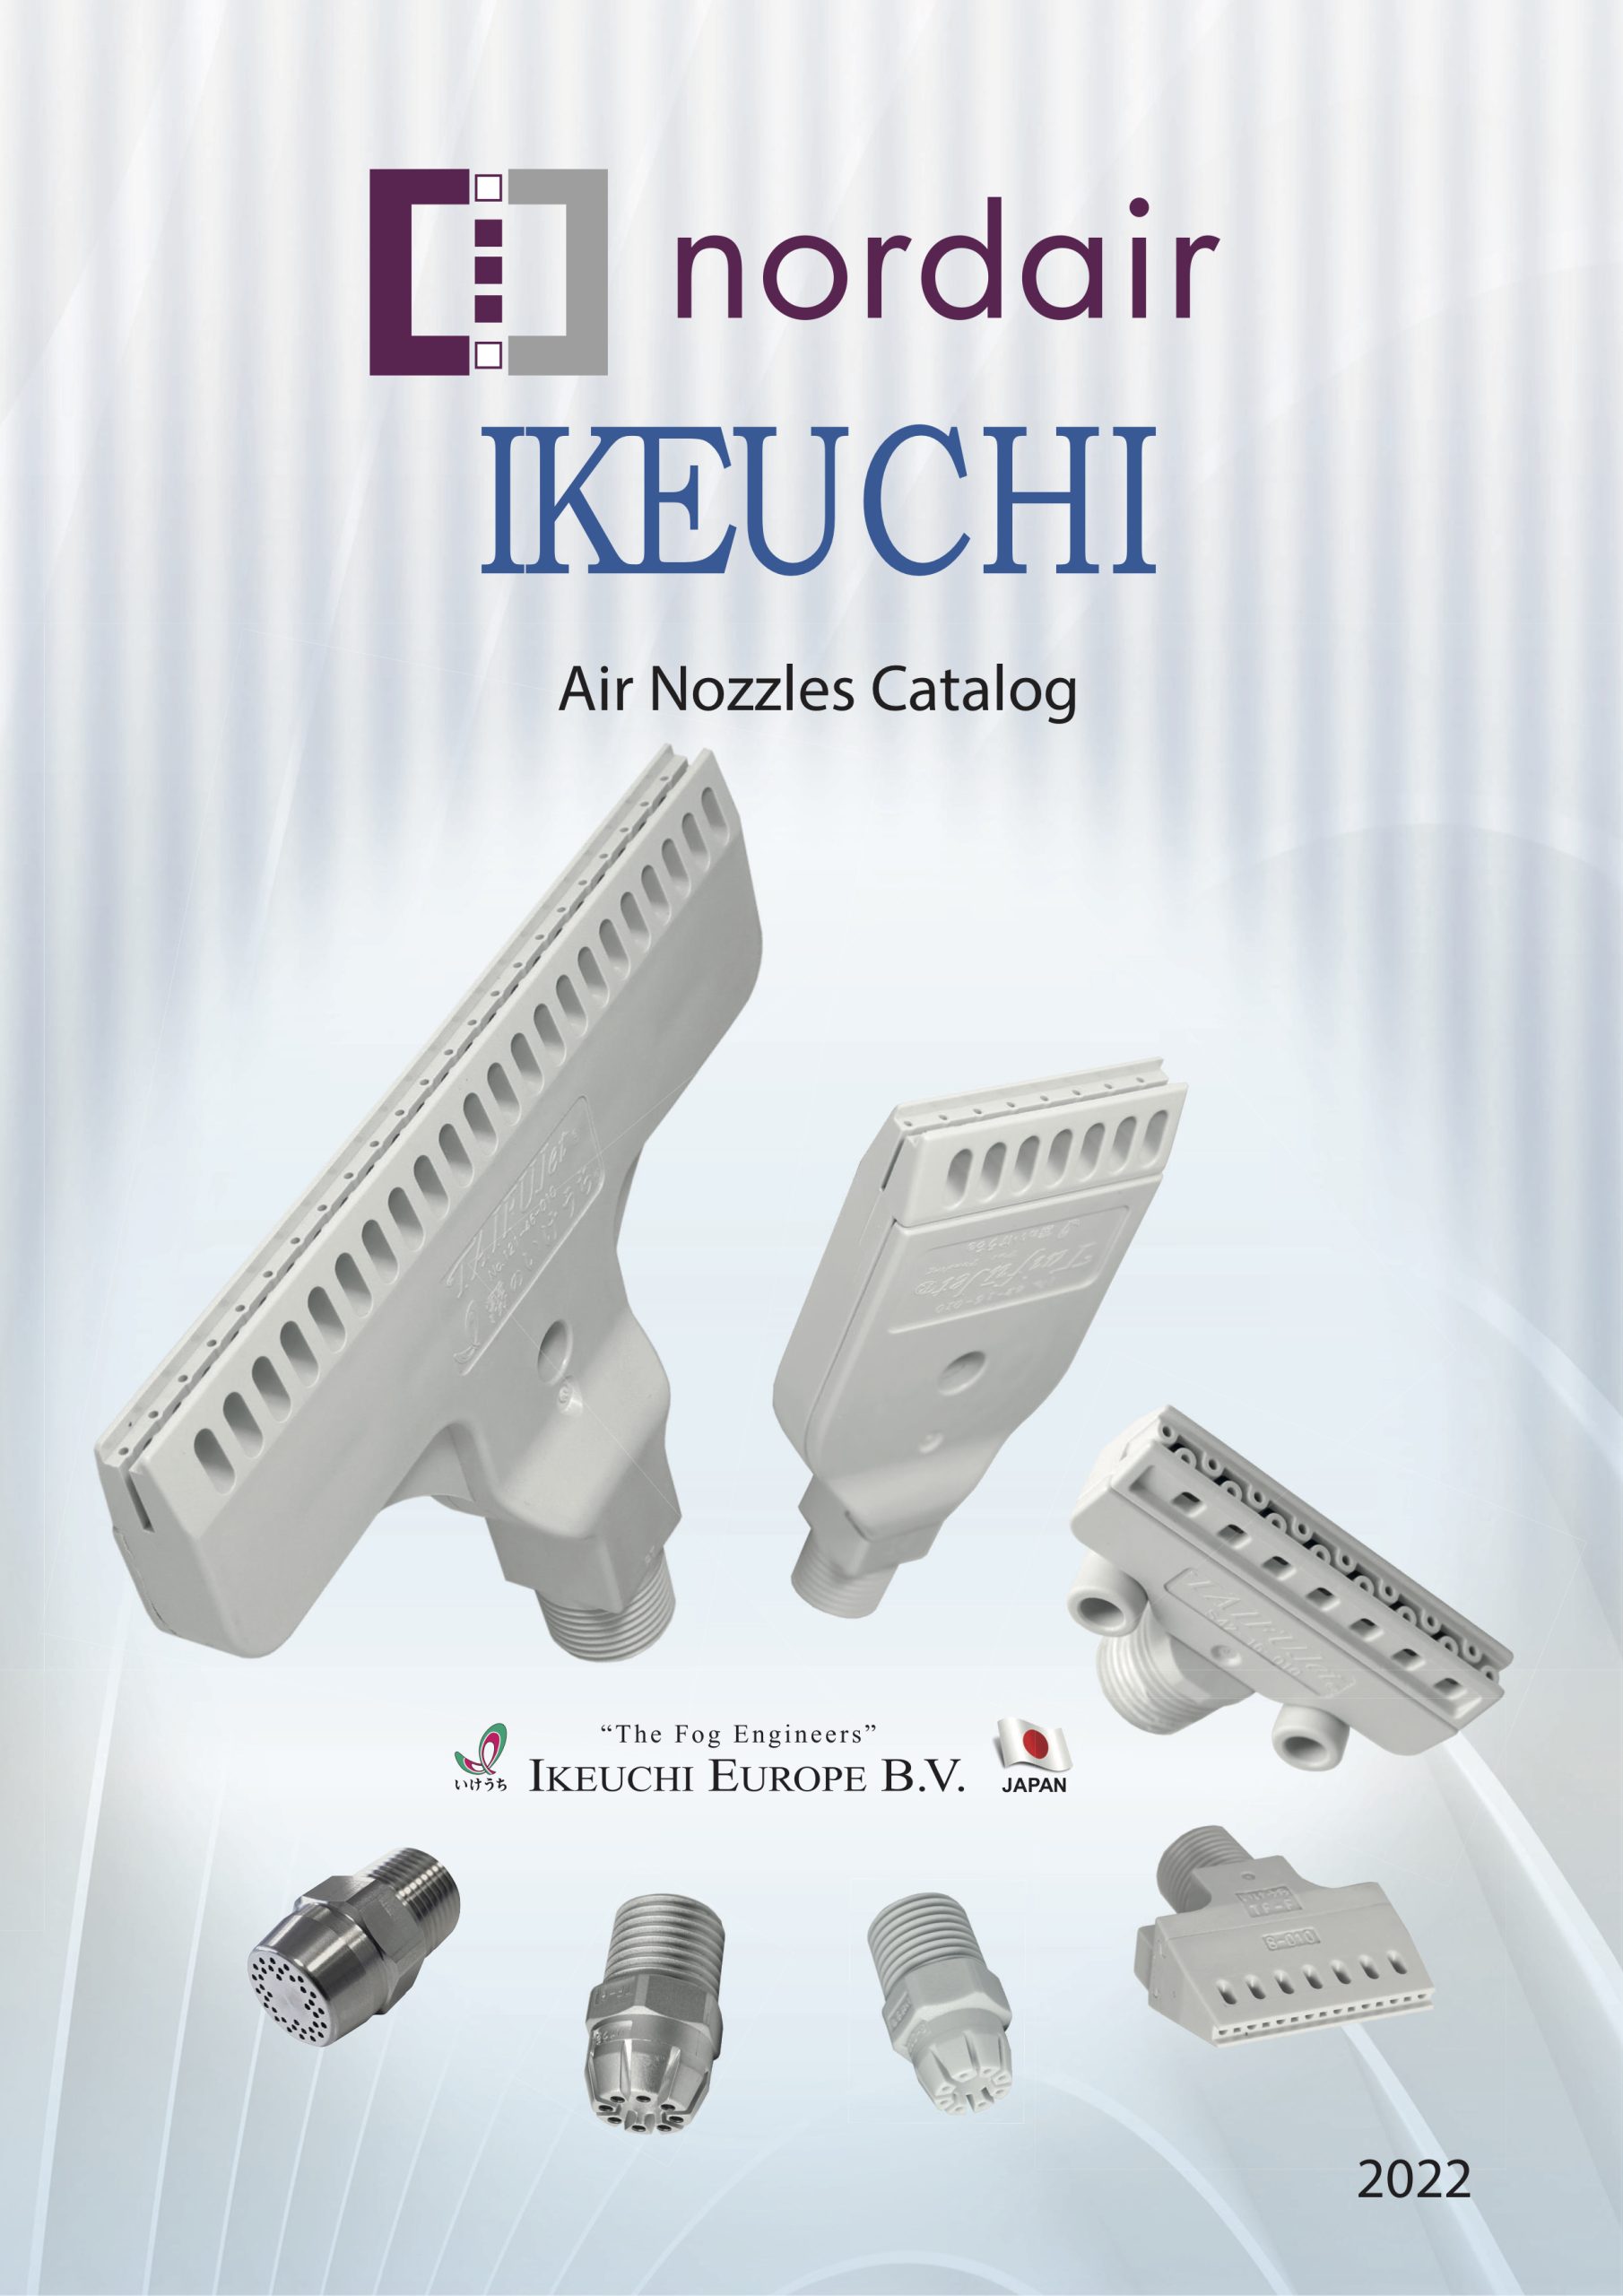 Air Nozzle Catalog